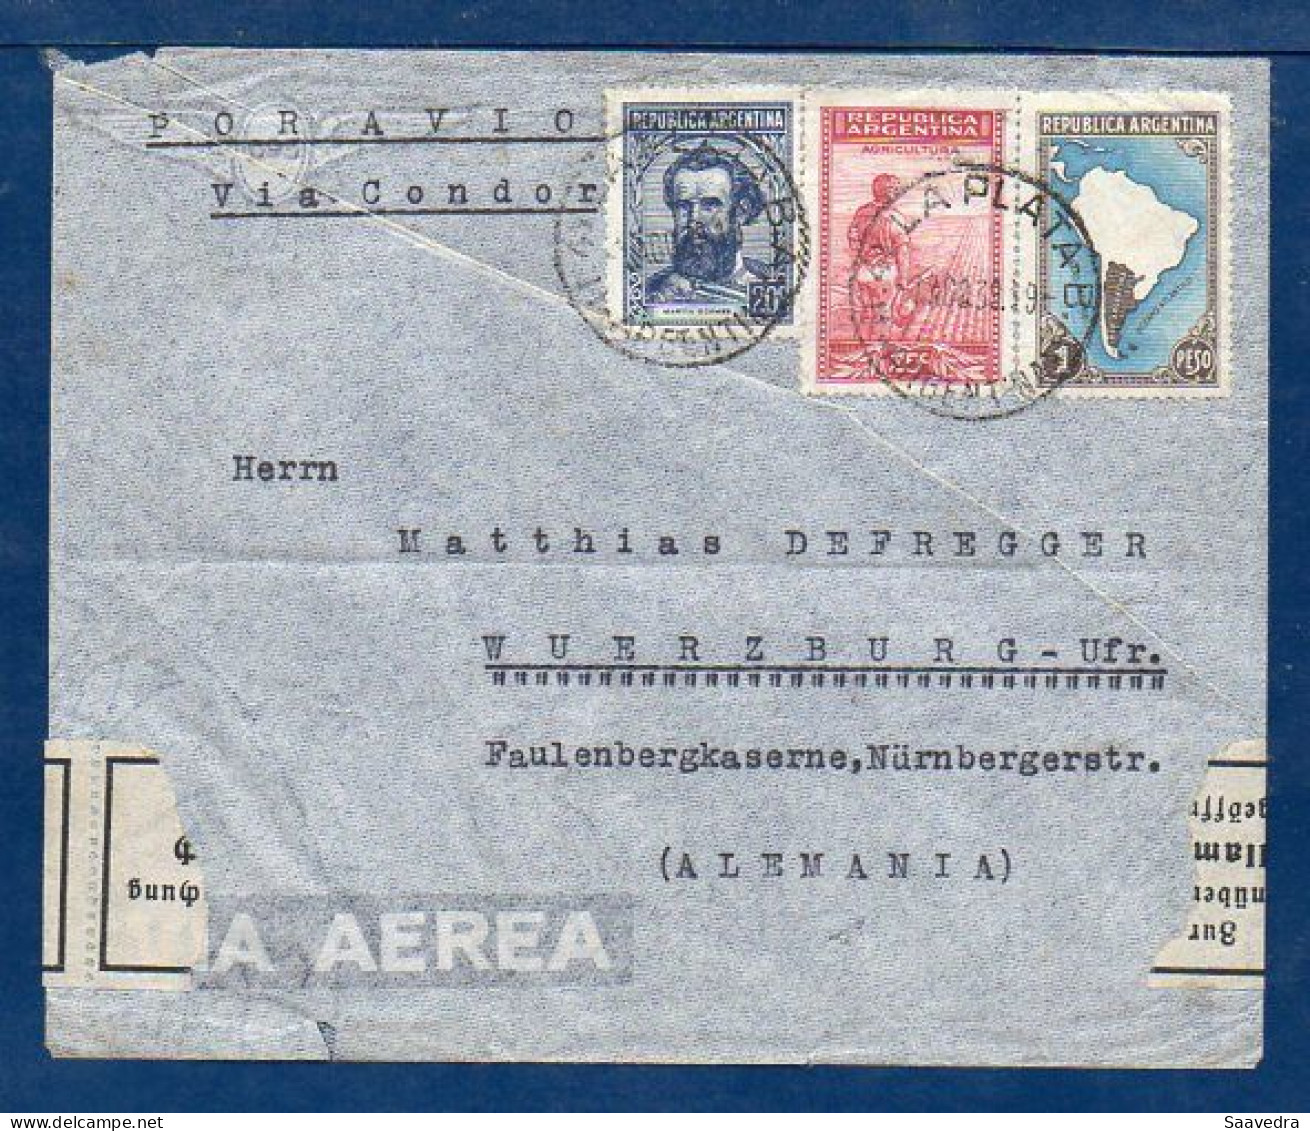 Argentina To Germany, 1939, Last Flight To Europe Via Condor, Flight L-480, Currency Censor Tape, SEE DESCRIPTION  (040) - Posta Aerea